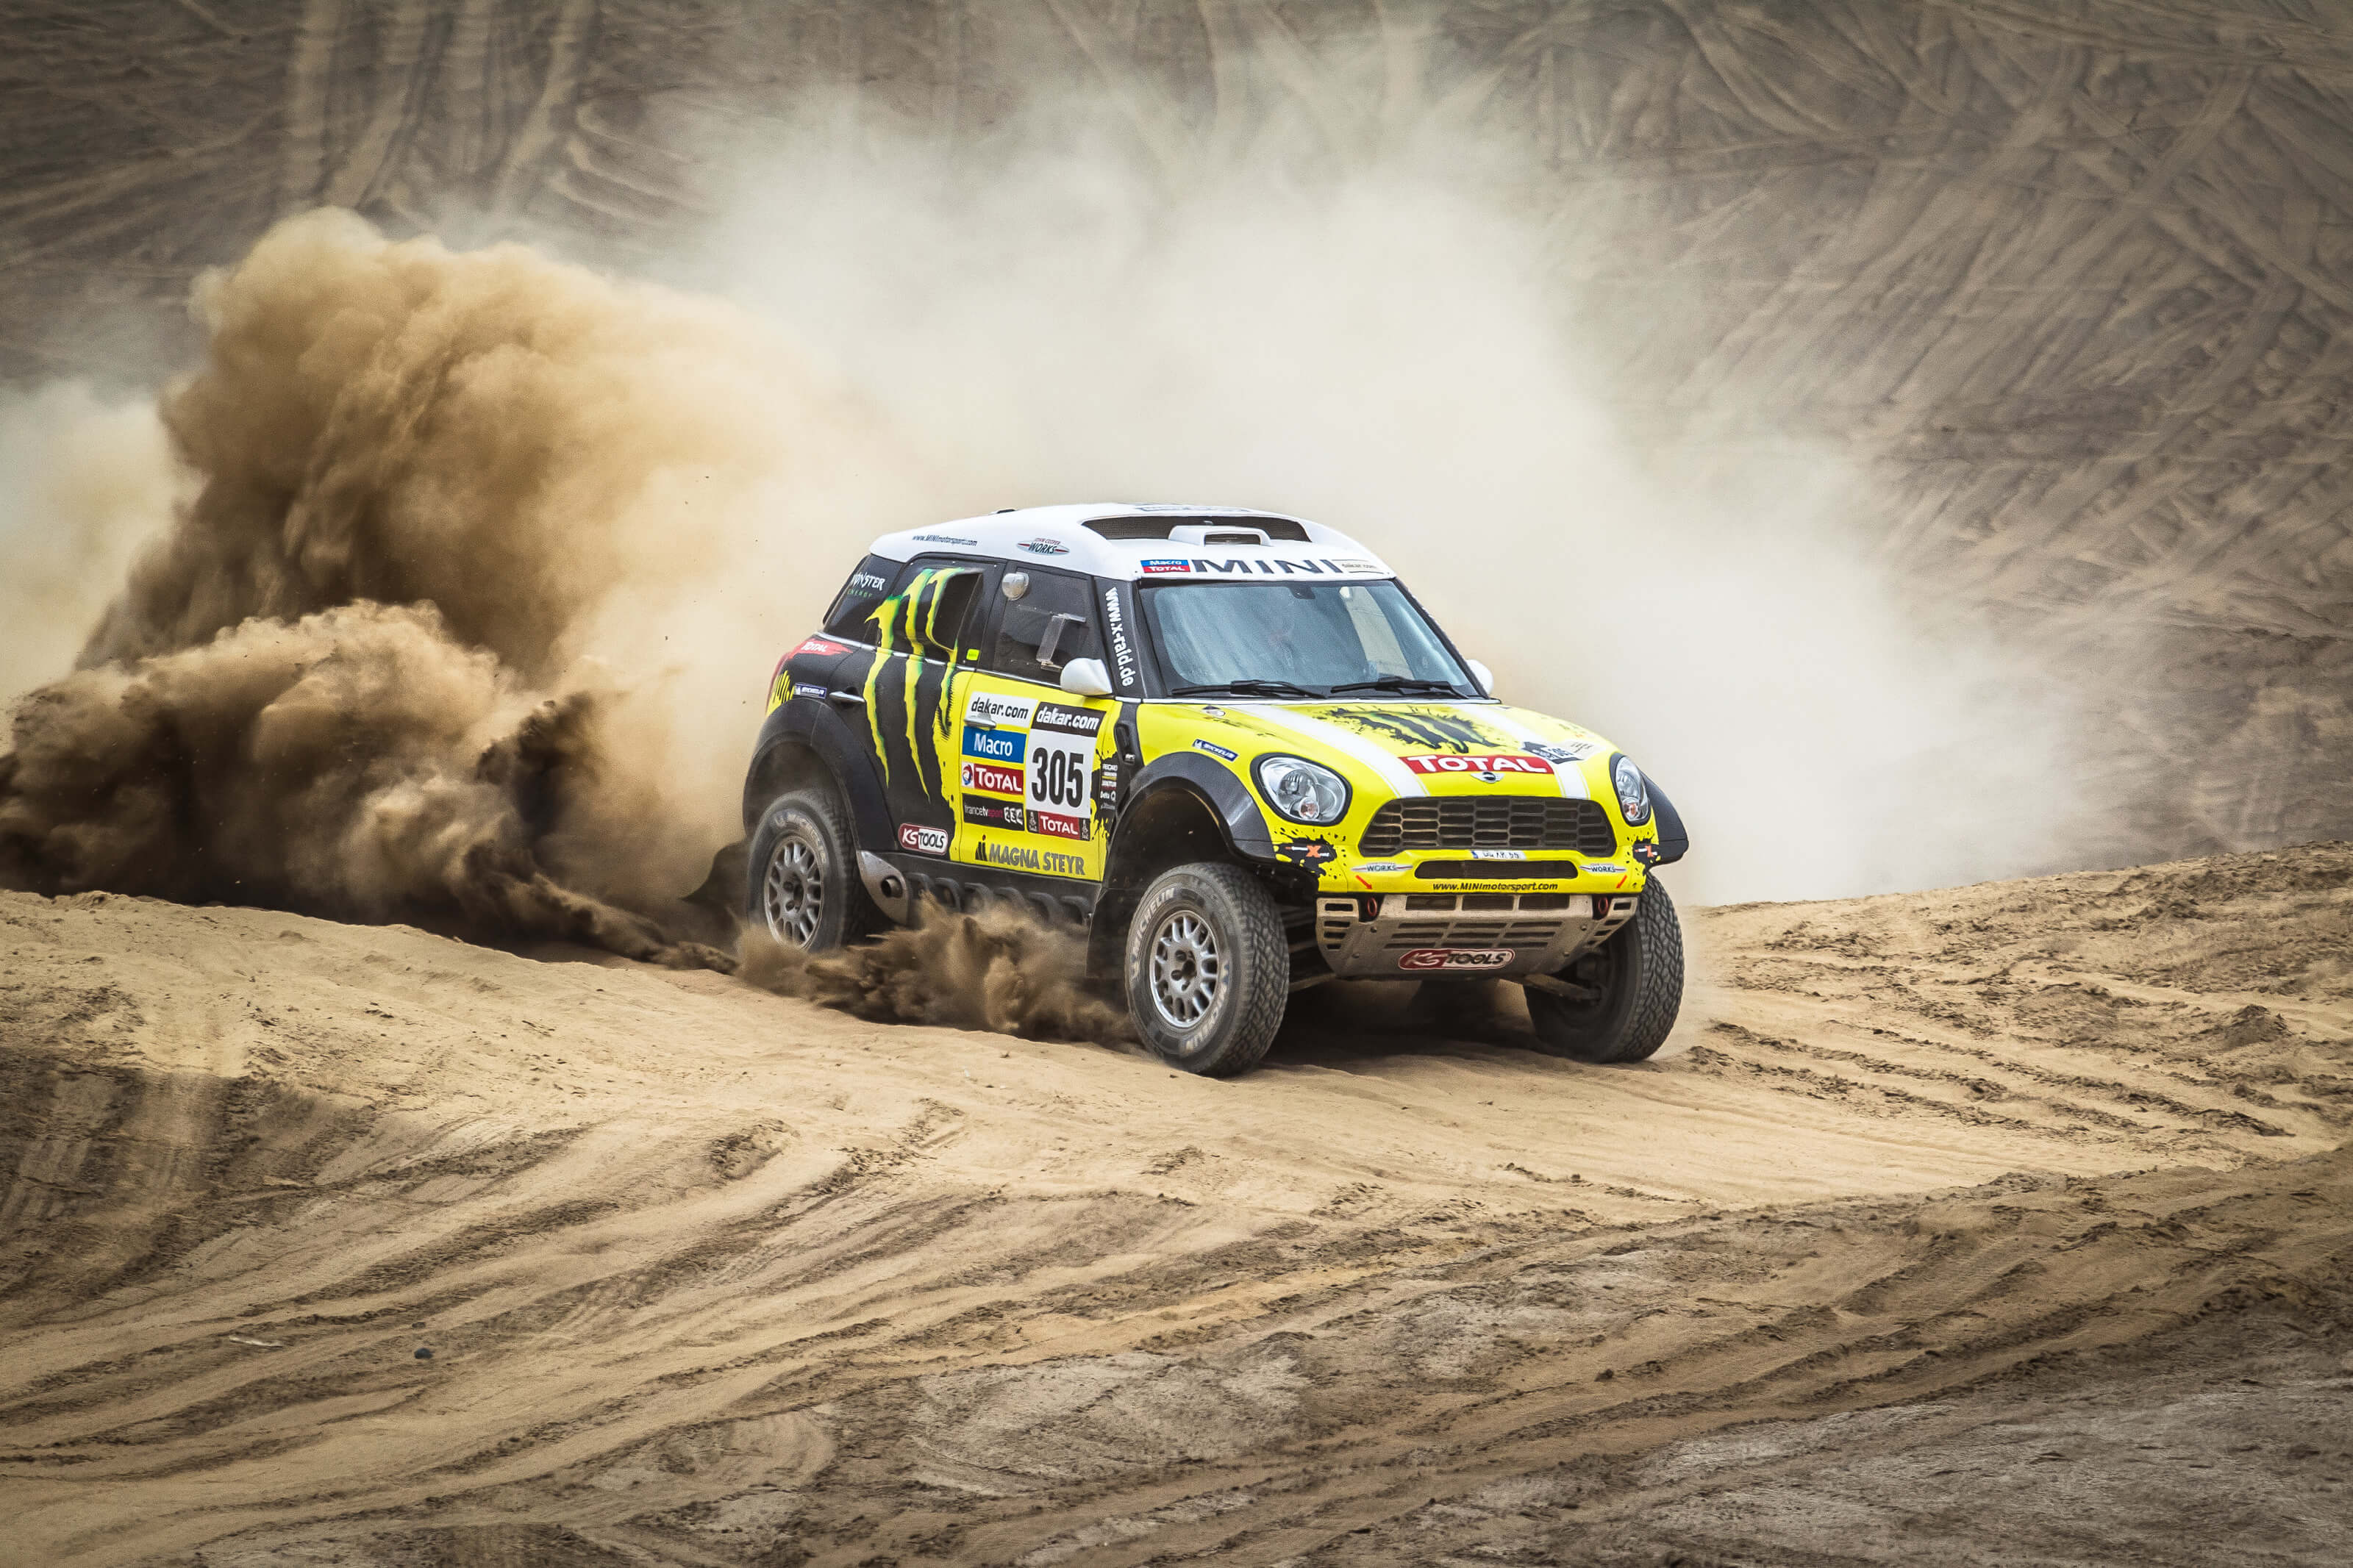 Rally Raid: Dakar Rally Race, X-Raid Team, German Crew Based In Trebur, Mini All4 Racing Car, Magna Steyr Automobile Company. 3200x2140 HD Wallpaper.